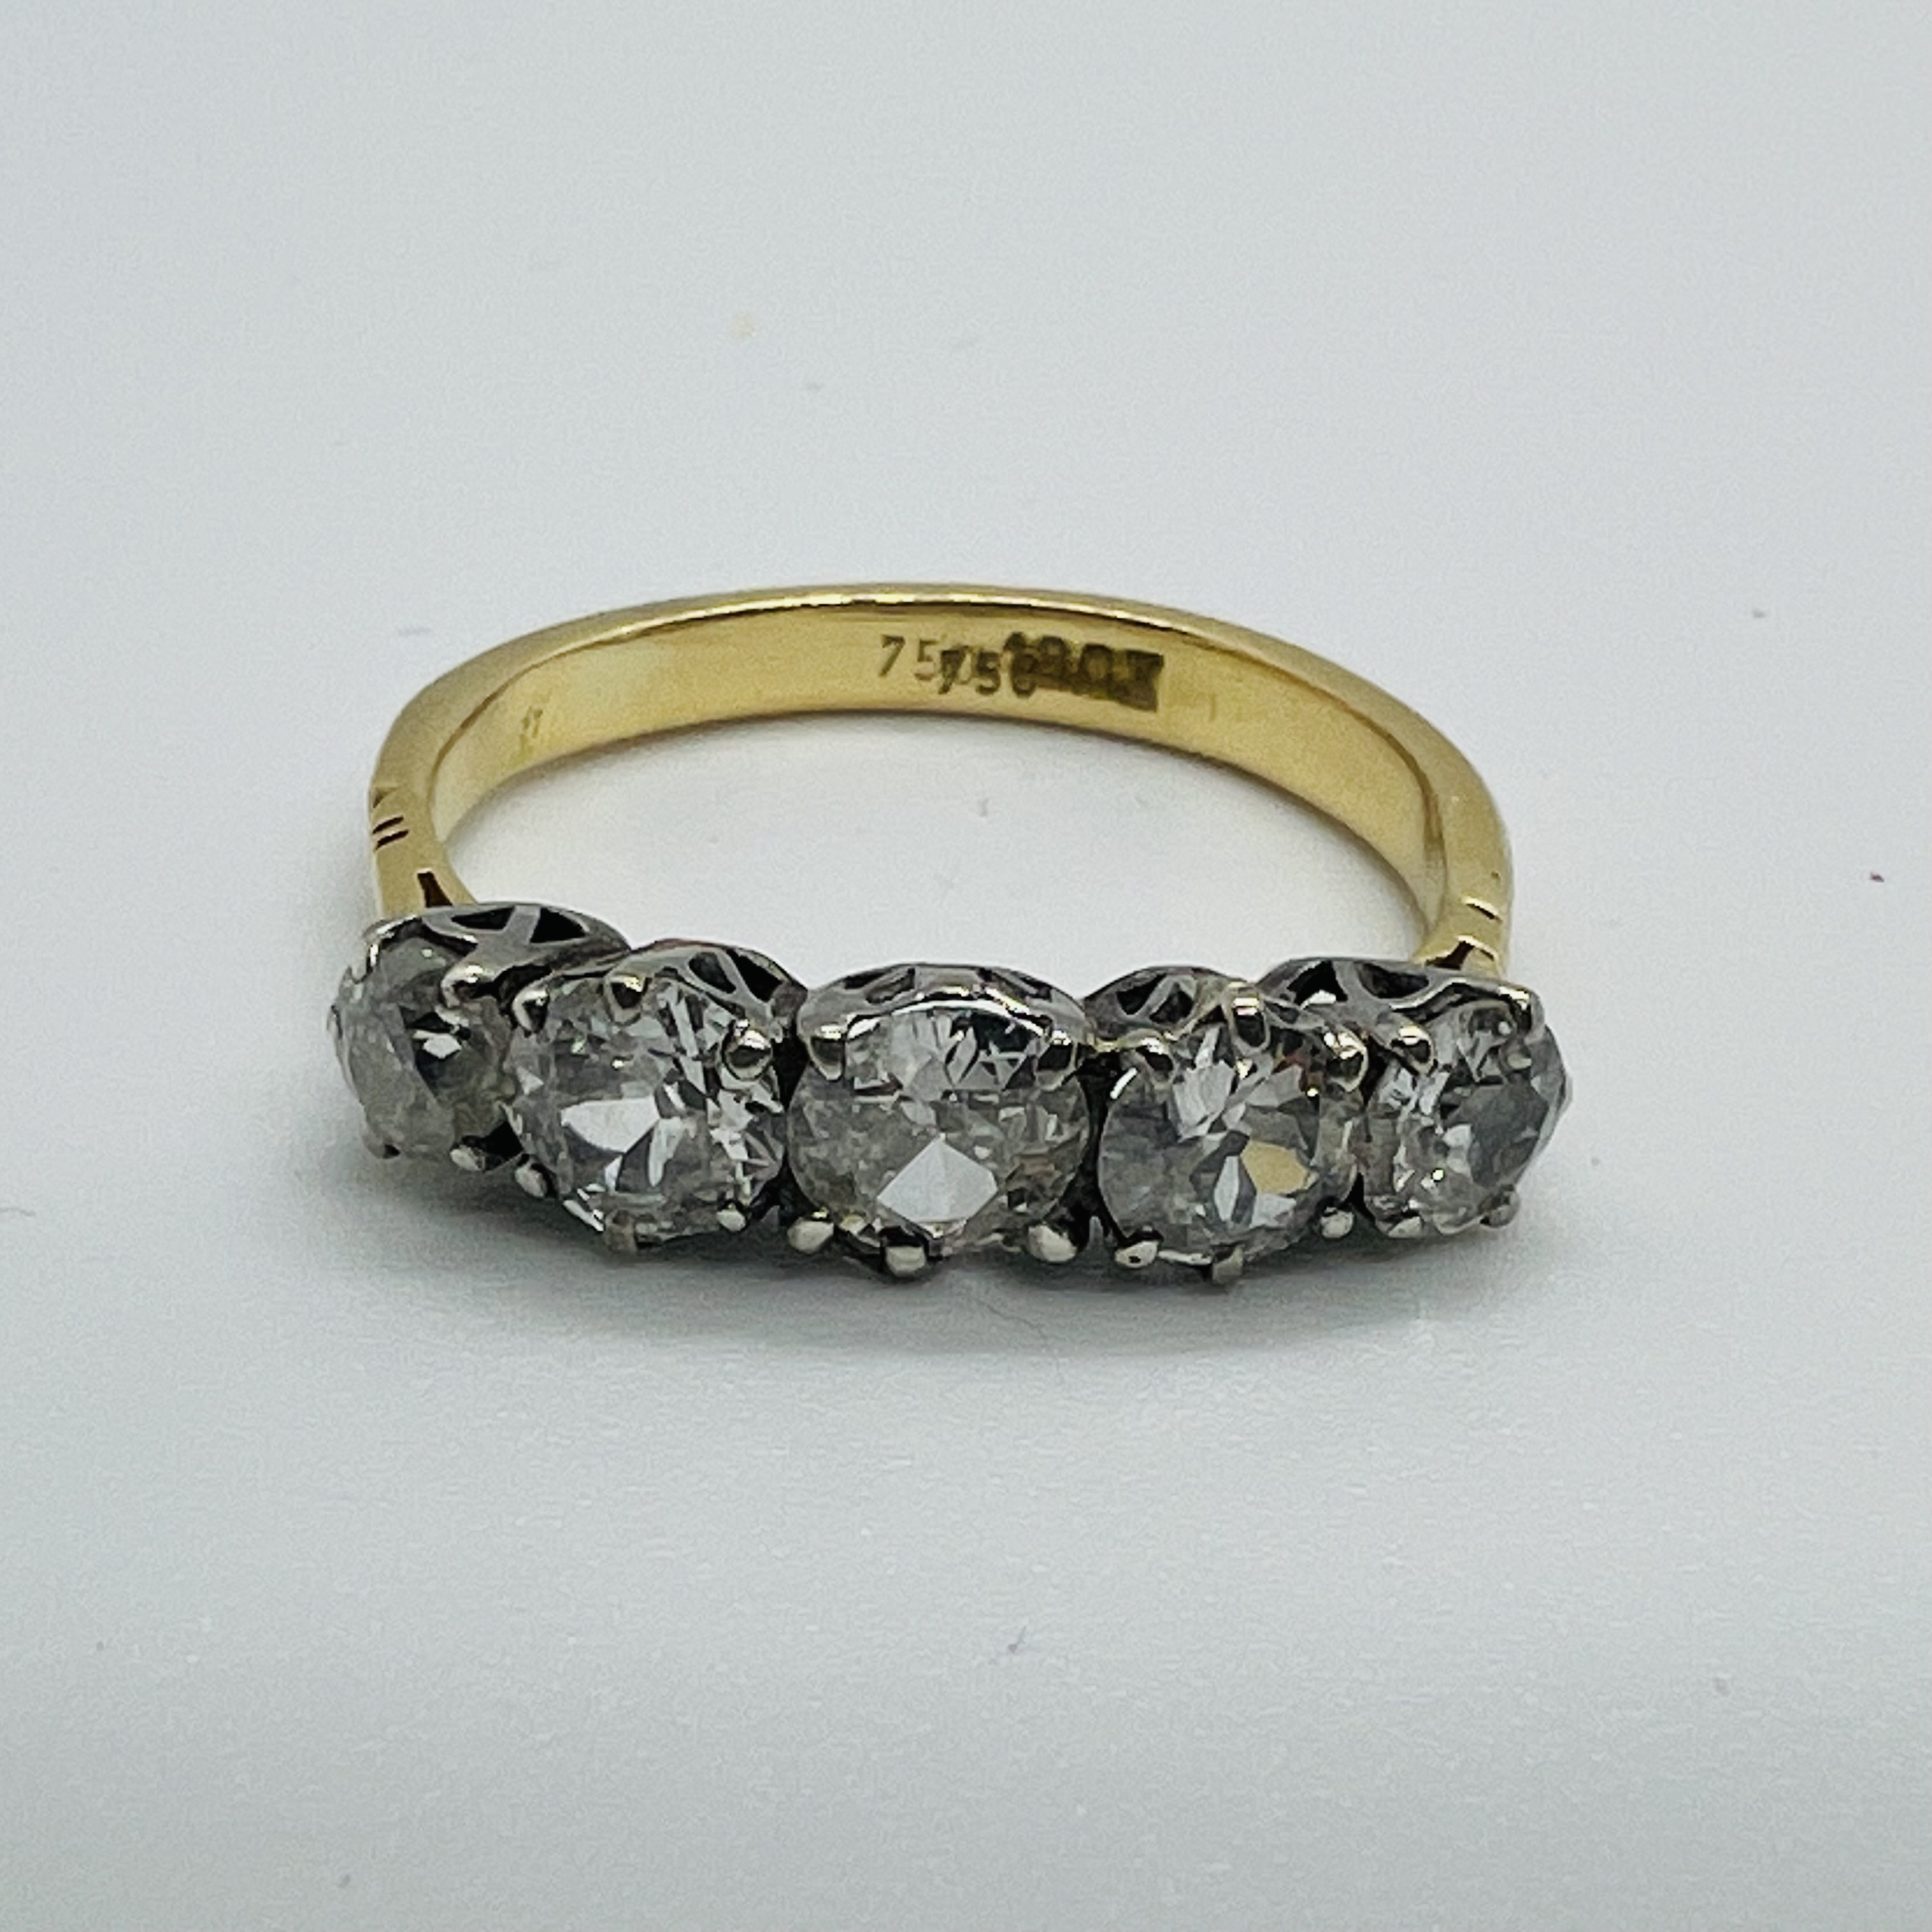 A five stone diamond ring, featuring five graduated old cut diamonds. In precious yellow metal